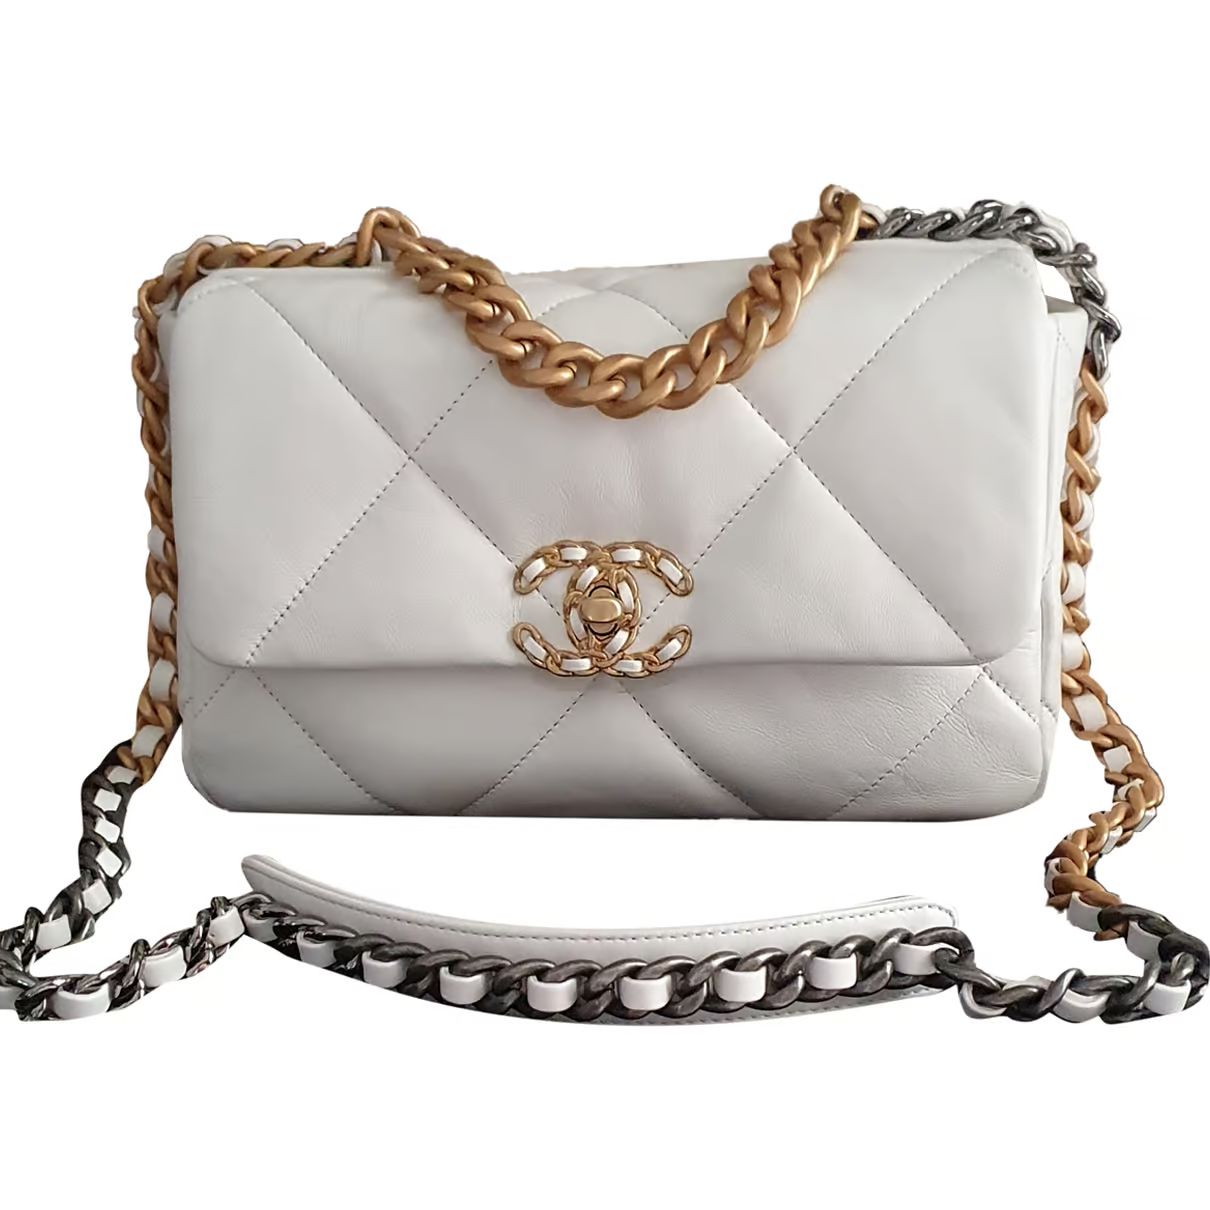 Chanel 19 Leder Handtaschen | Vestiaire Collective (Global)